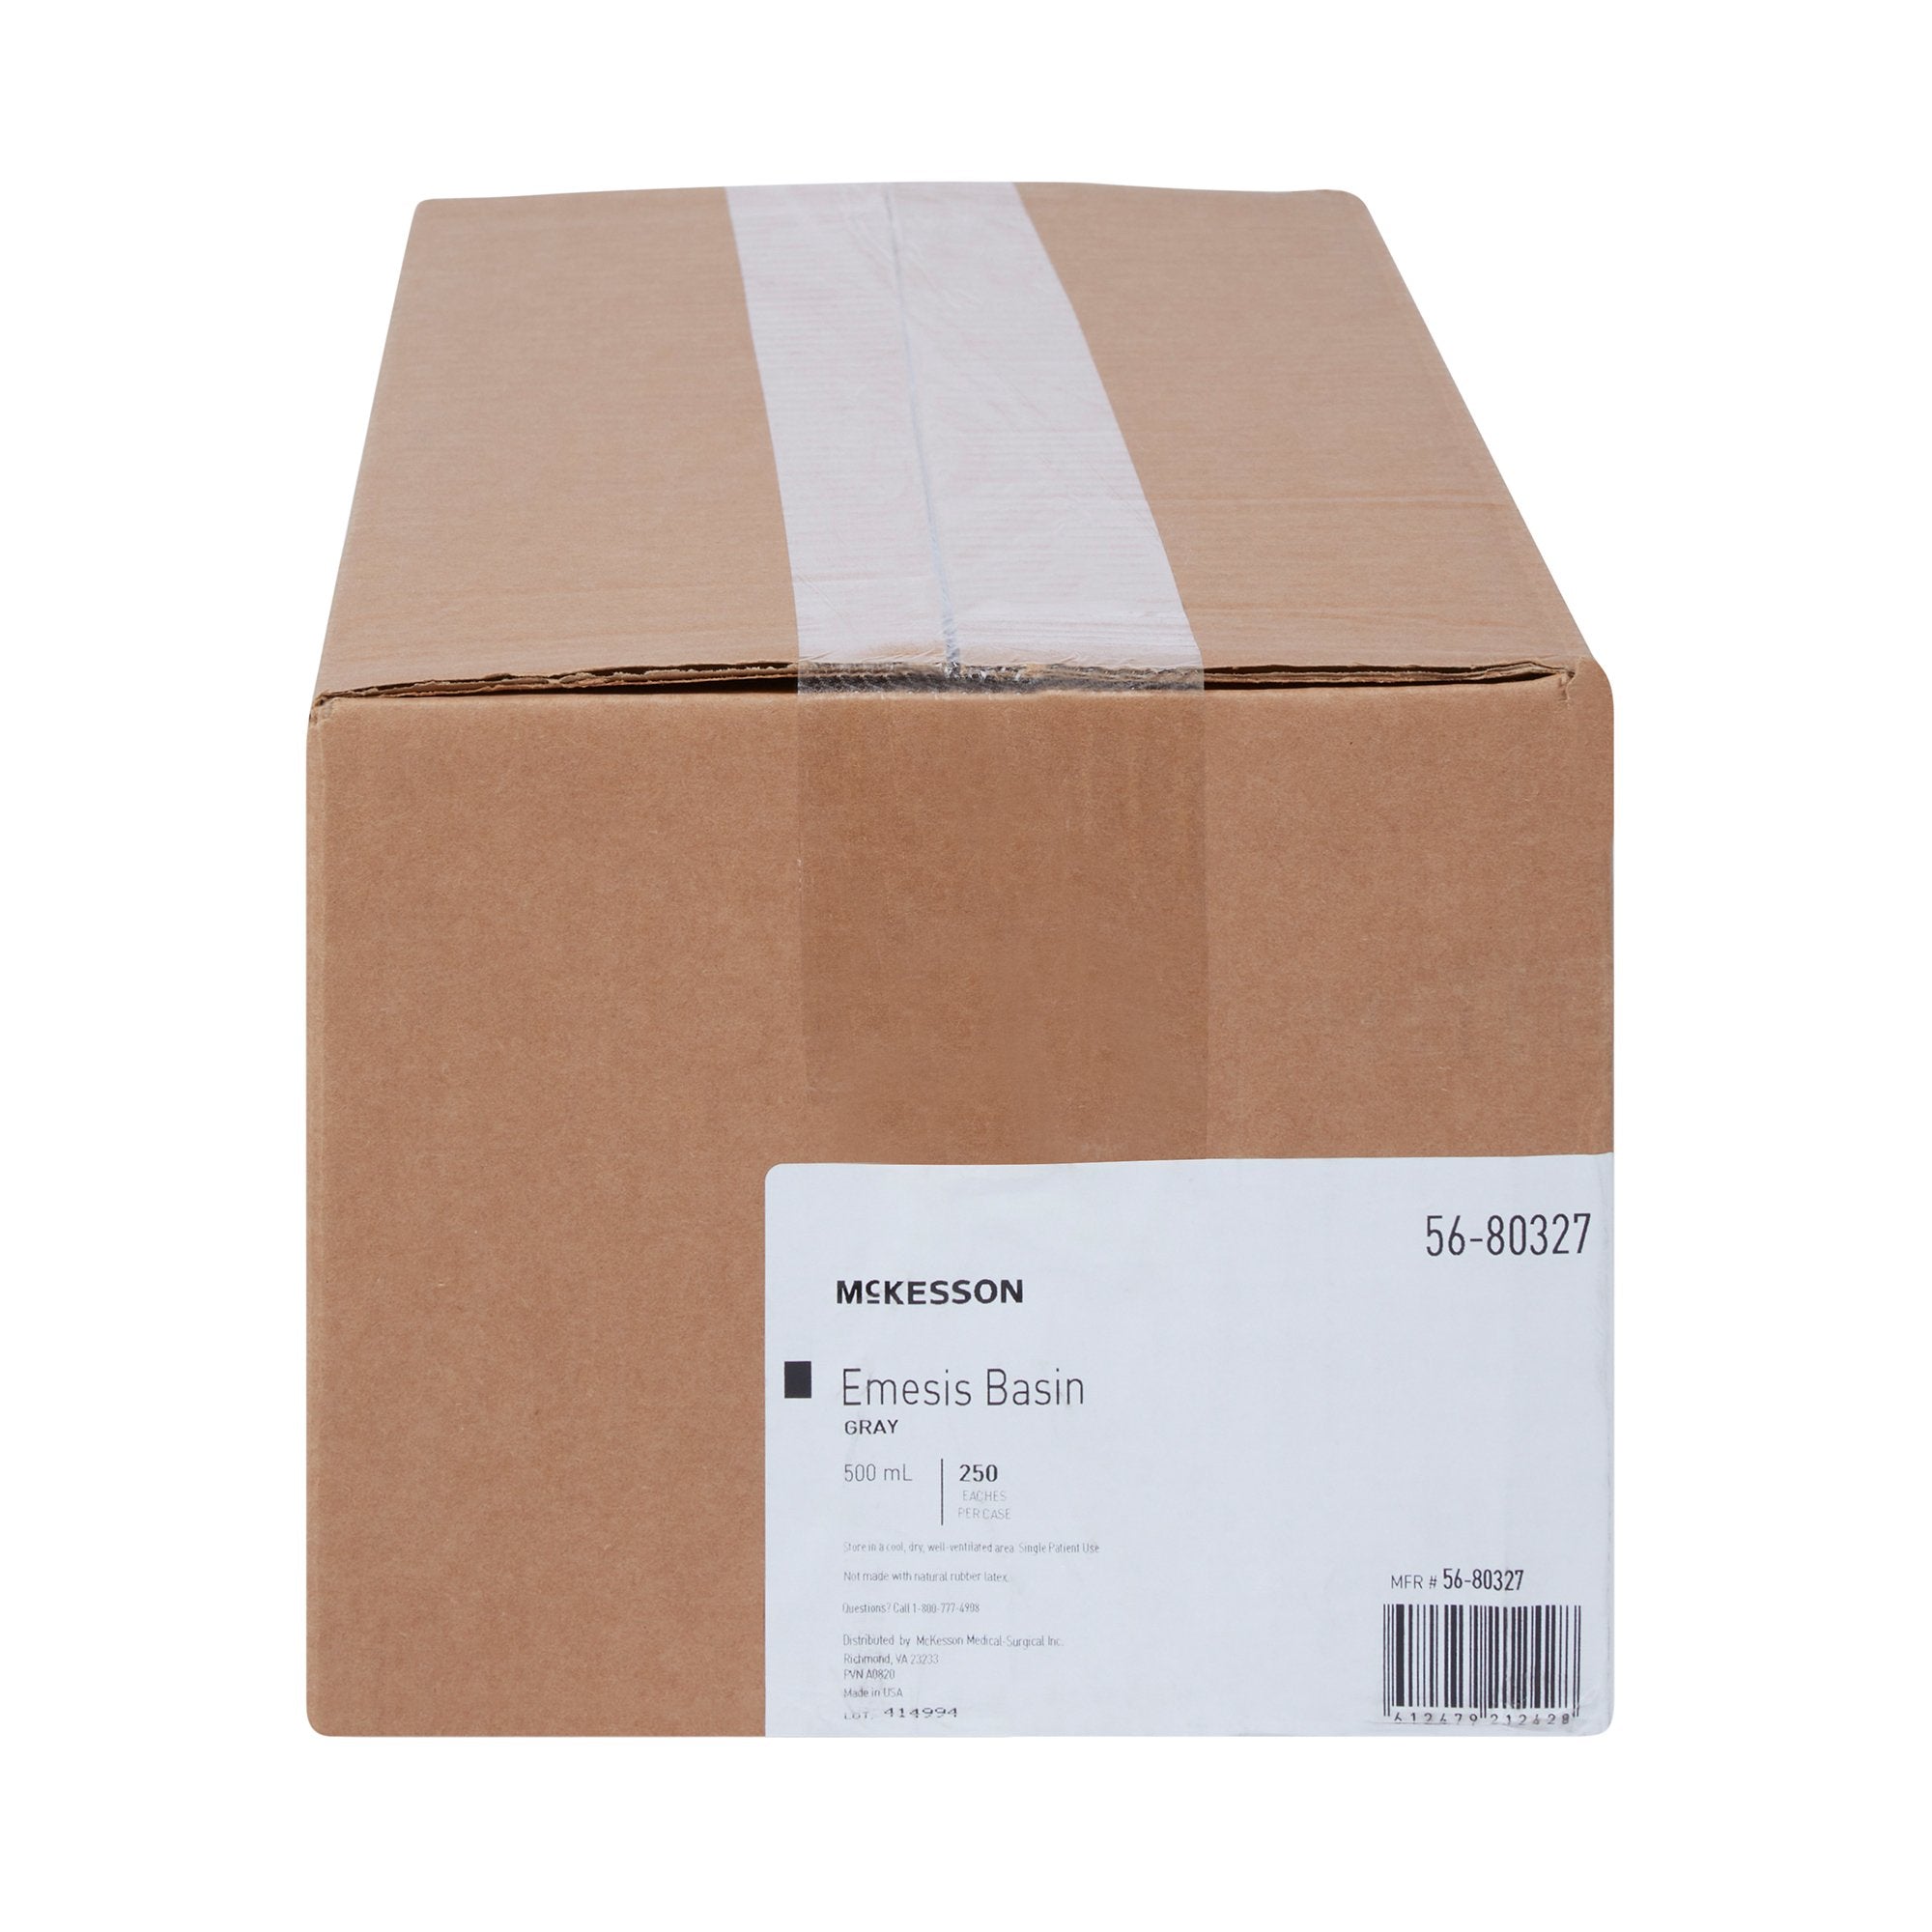 McKesson Graphite Emesis Basin 16 oz - Durable Plastic, 250 Pack